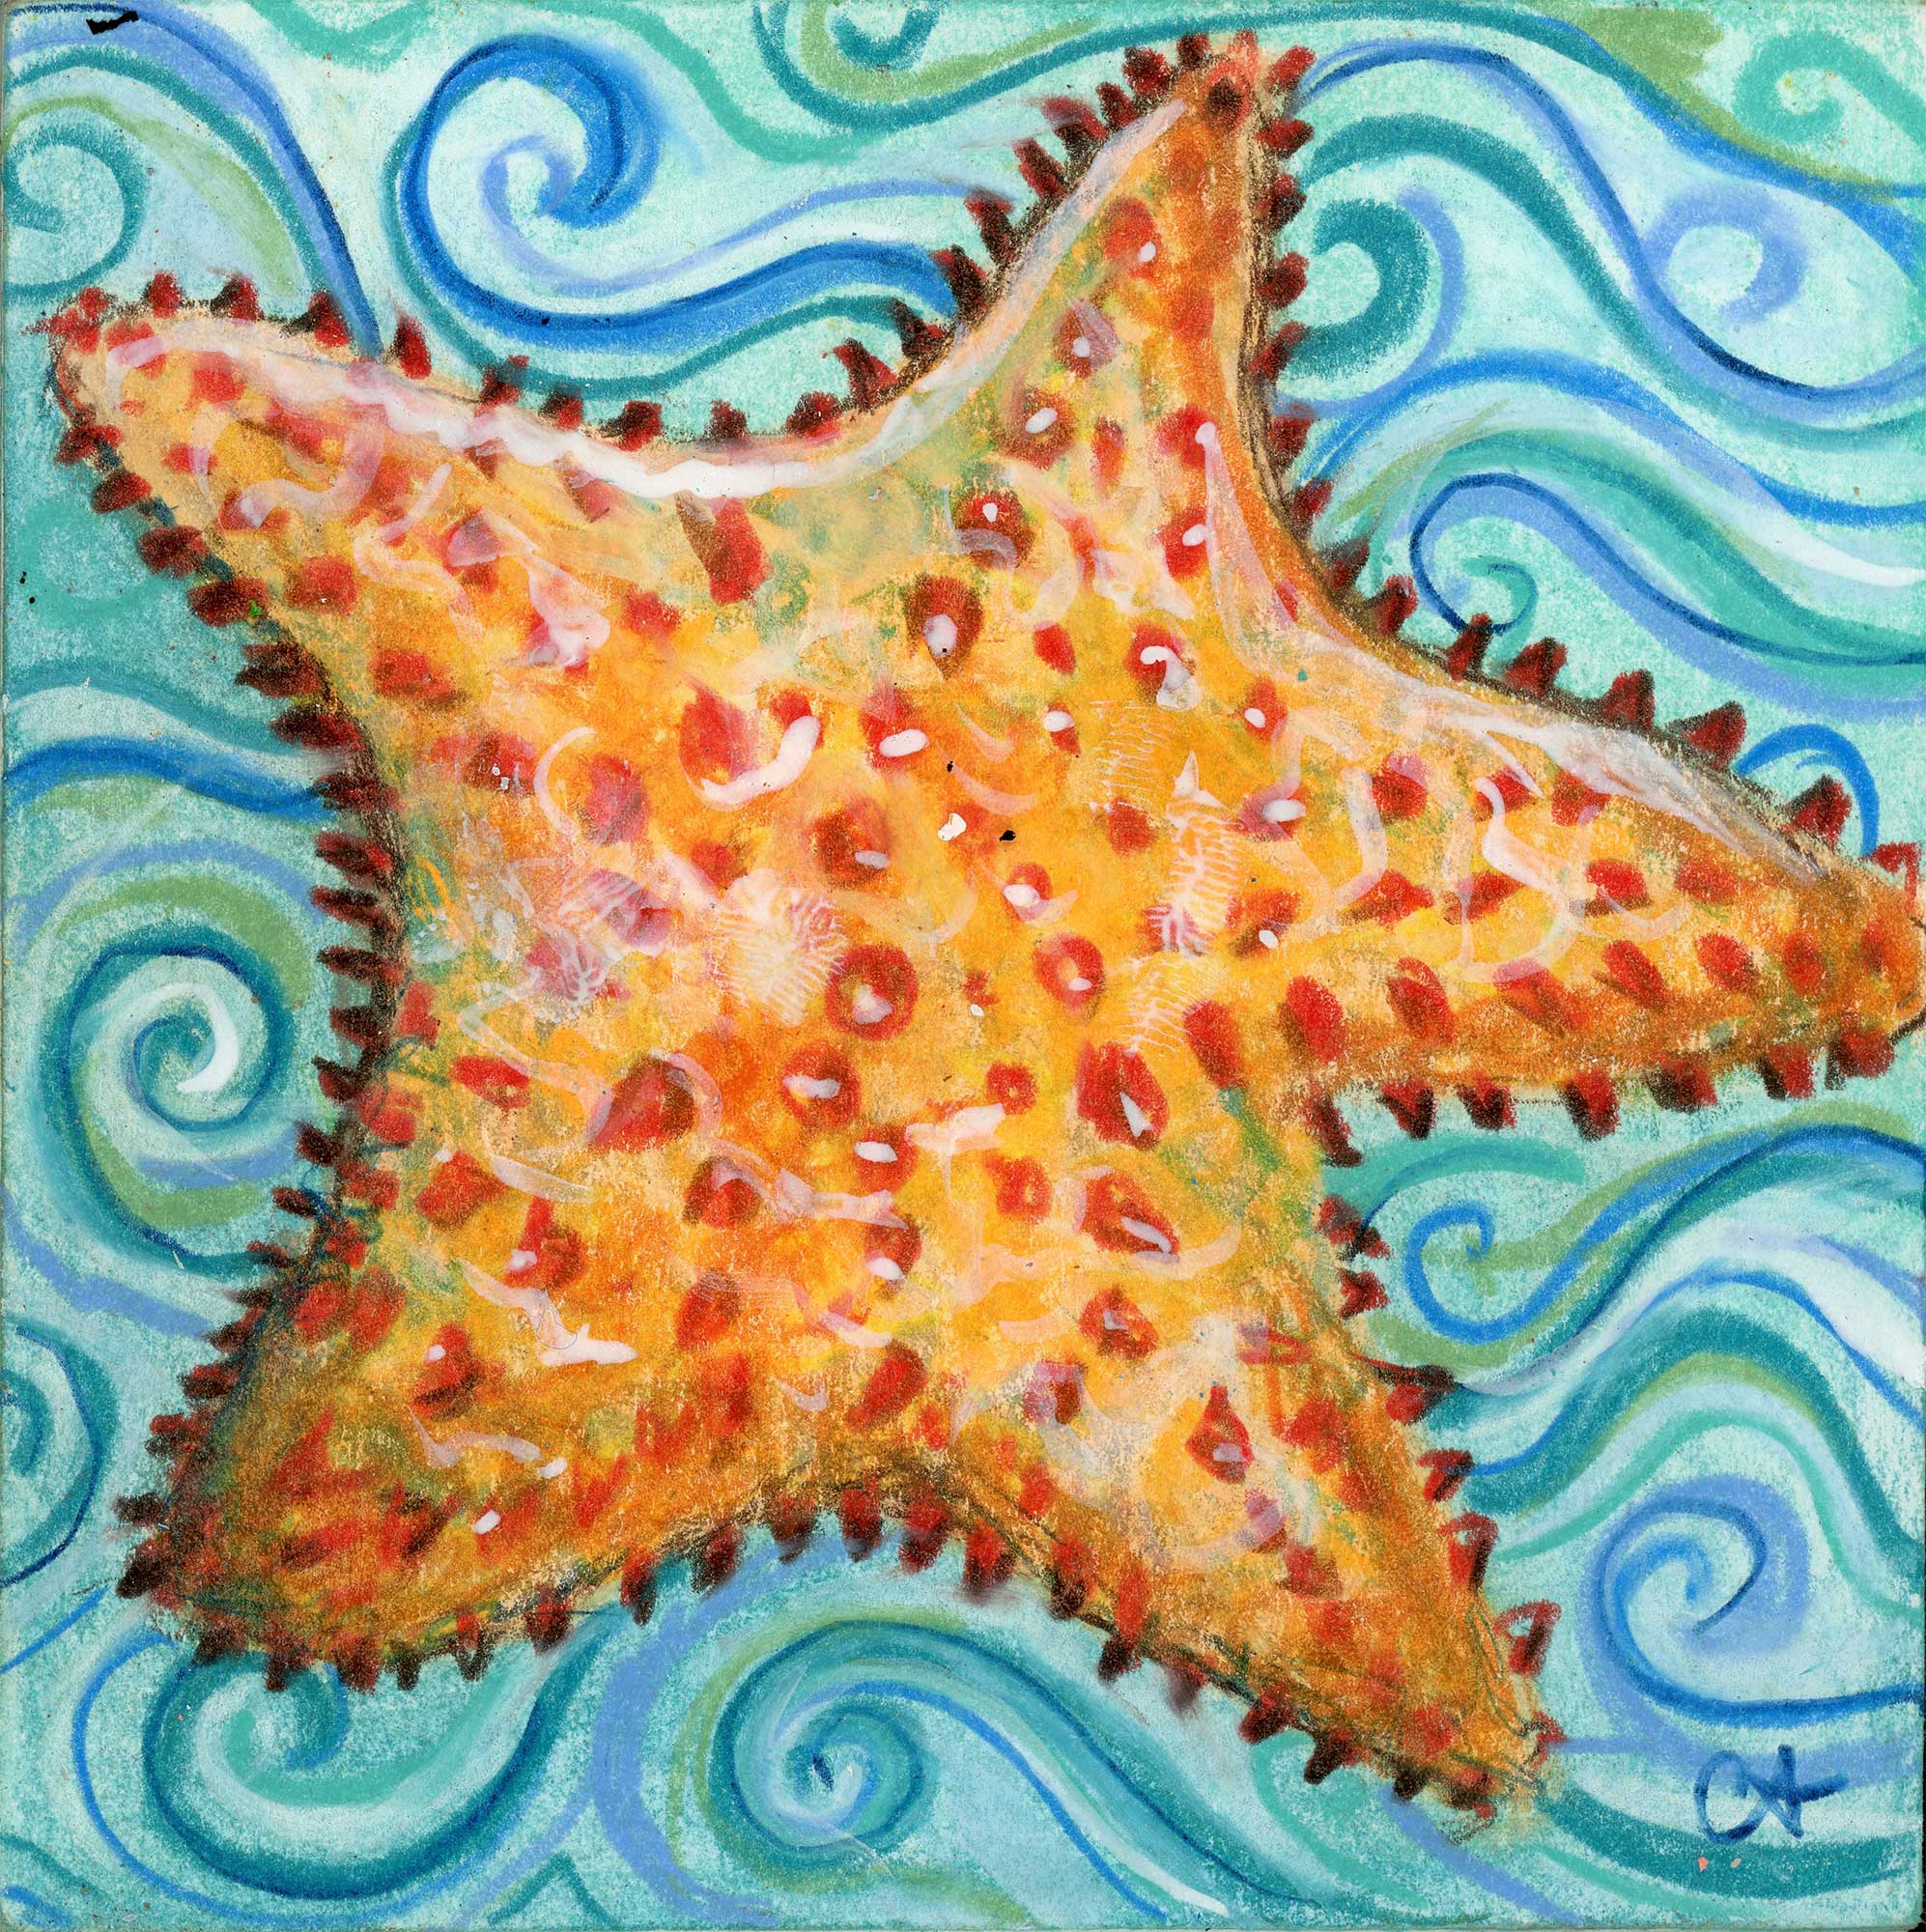 SOLD - "Orange Sea Star", 6" x 6", mixed media